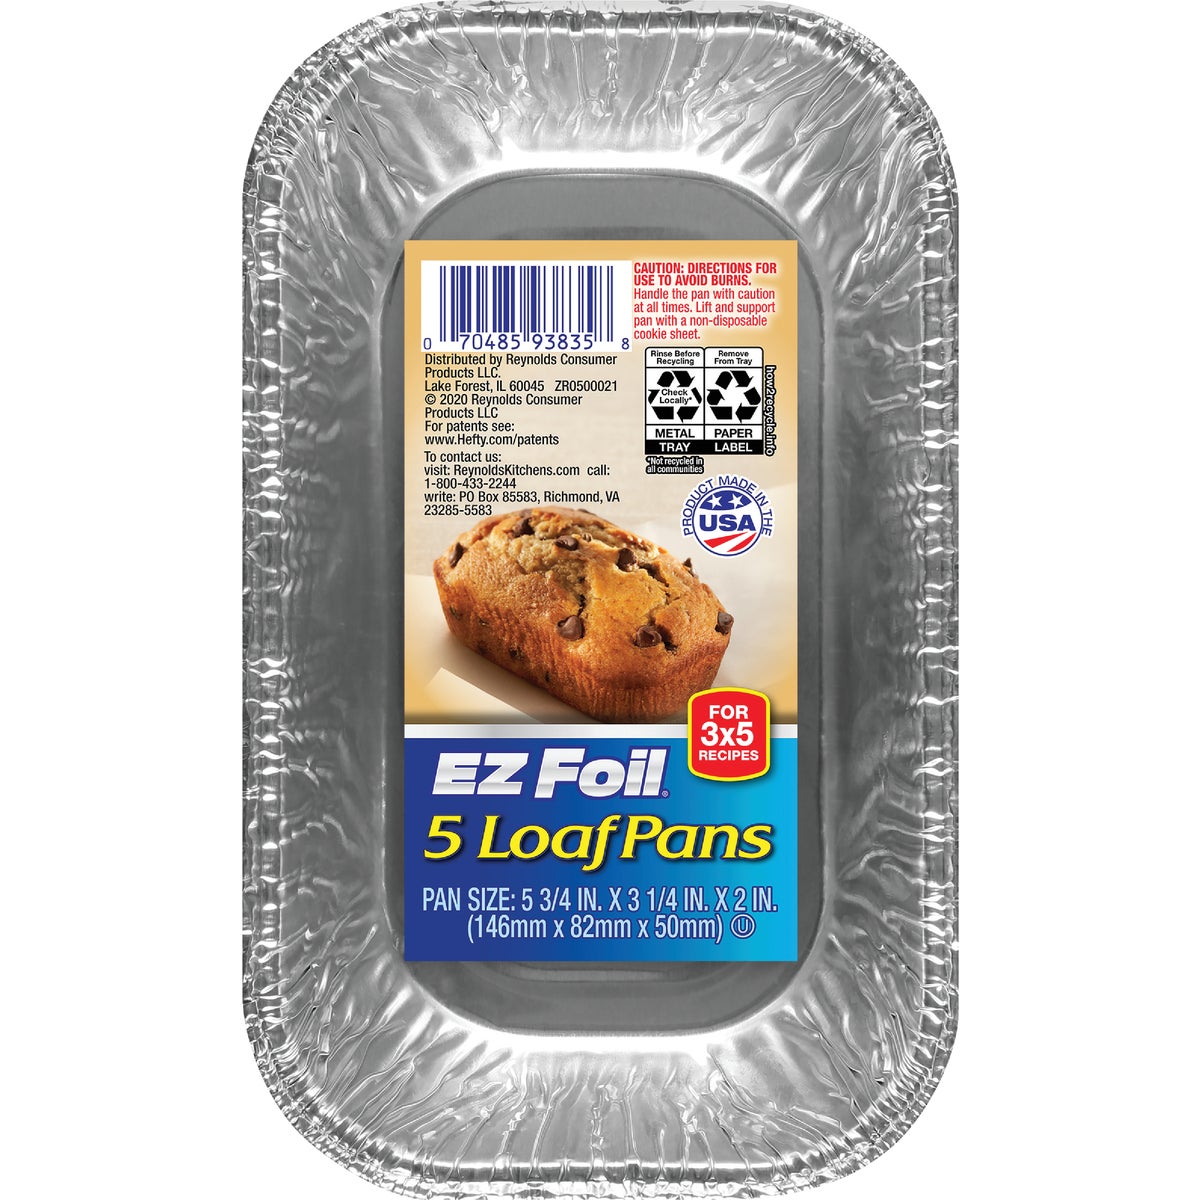 Item 649793, EZ Foil baby loaf pans are reusable, convenient, and sturdy.